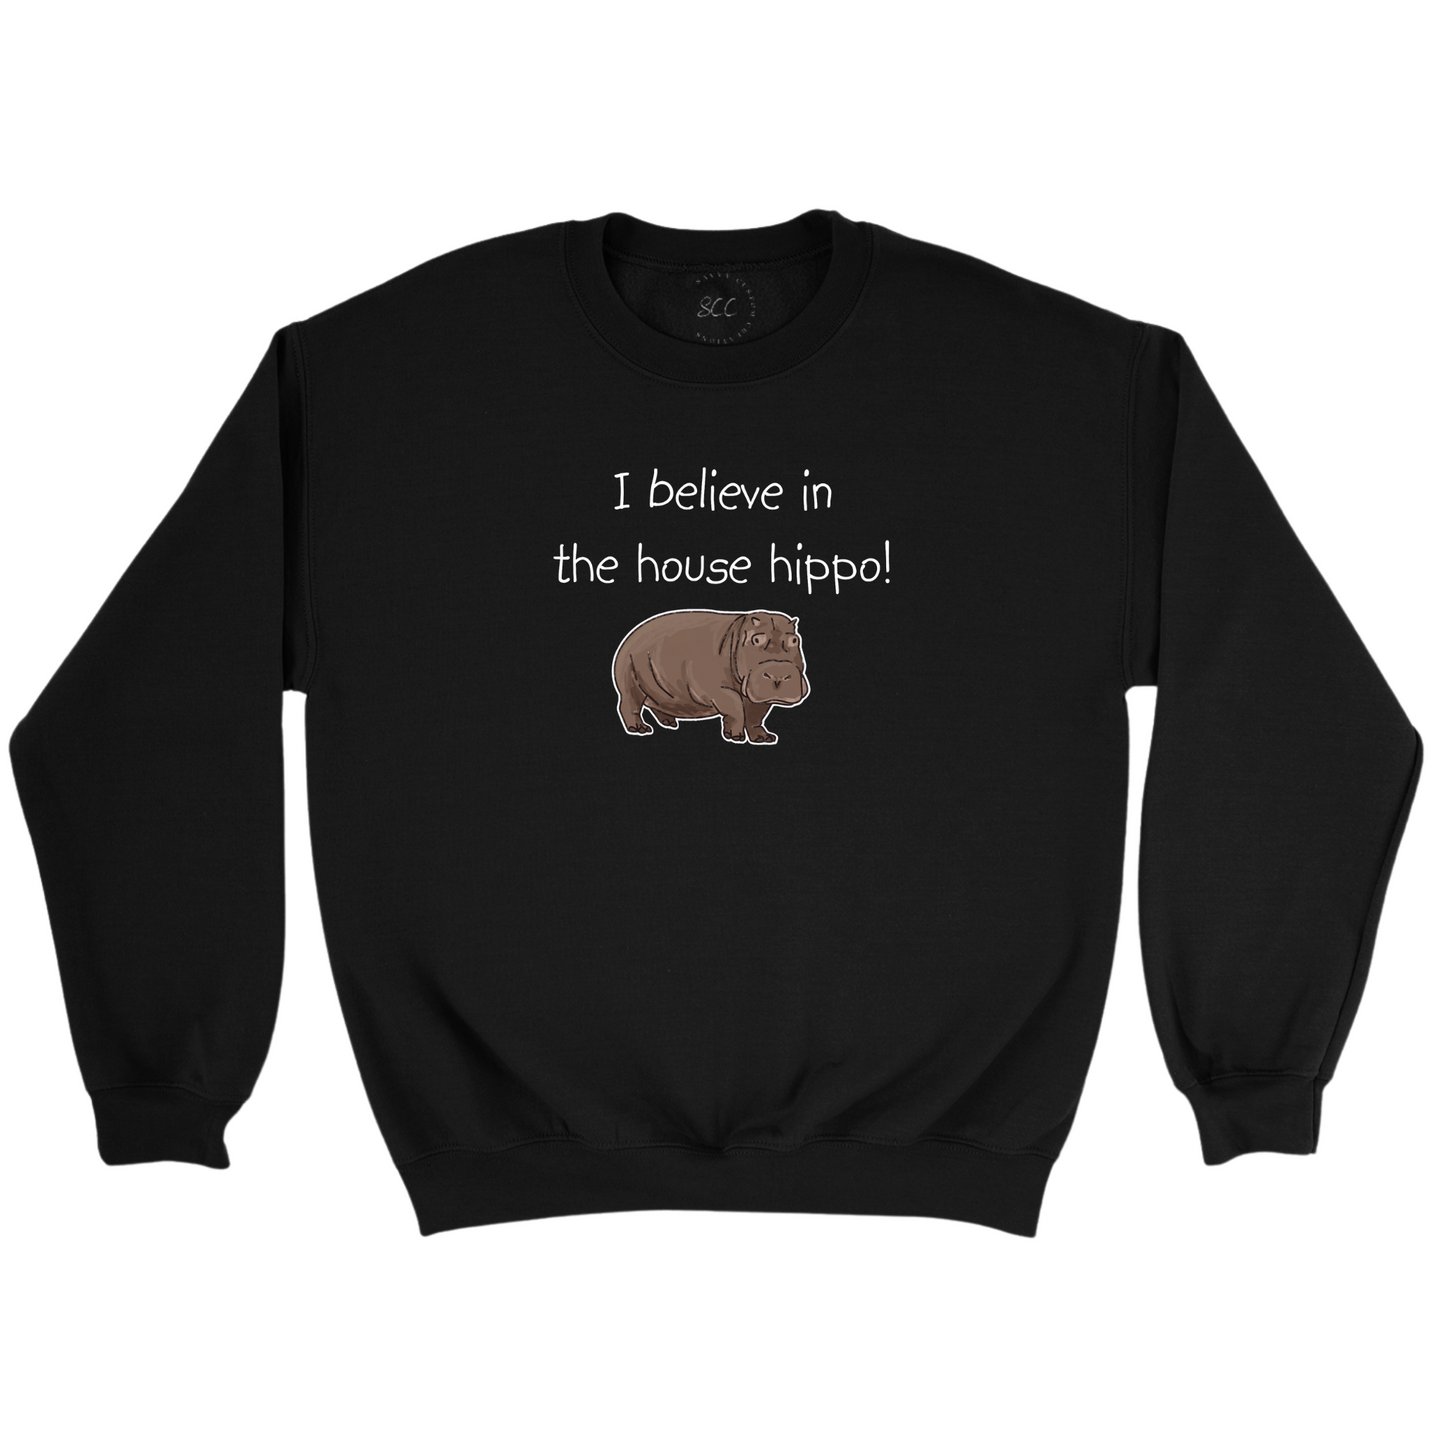 I BELIEVE IN THE HOUSE HIPPO! - Unisex Sweatshirt